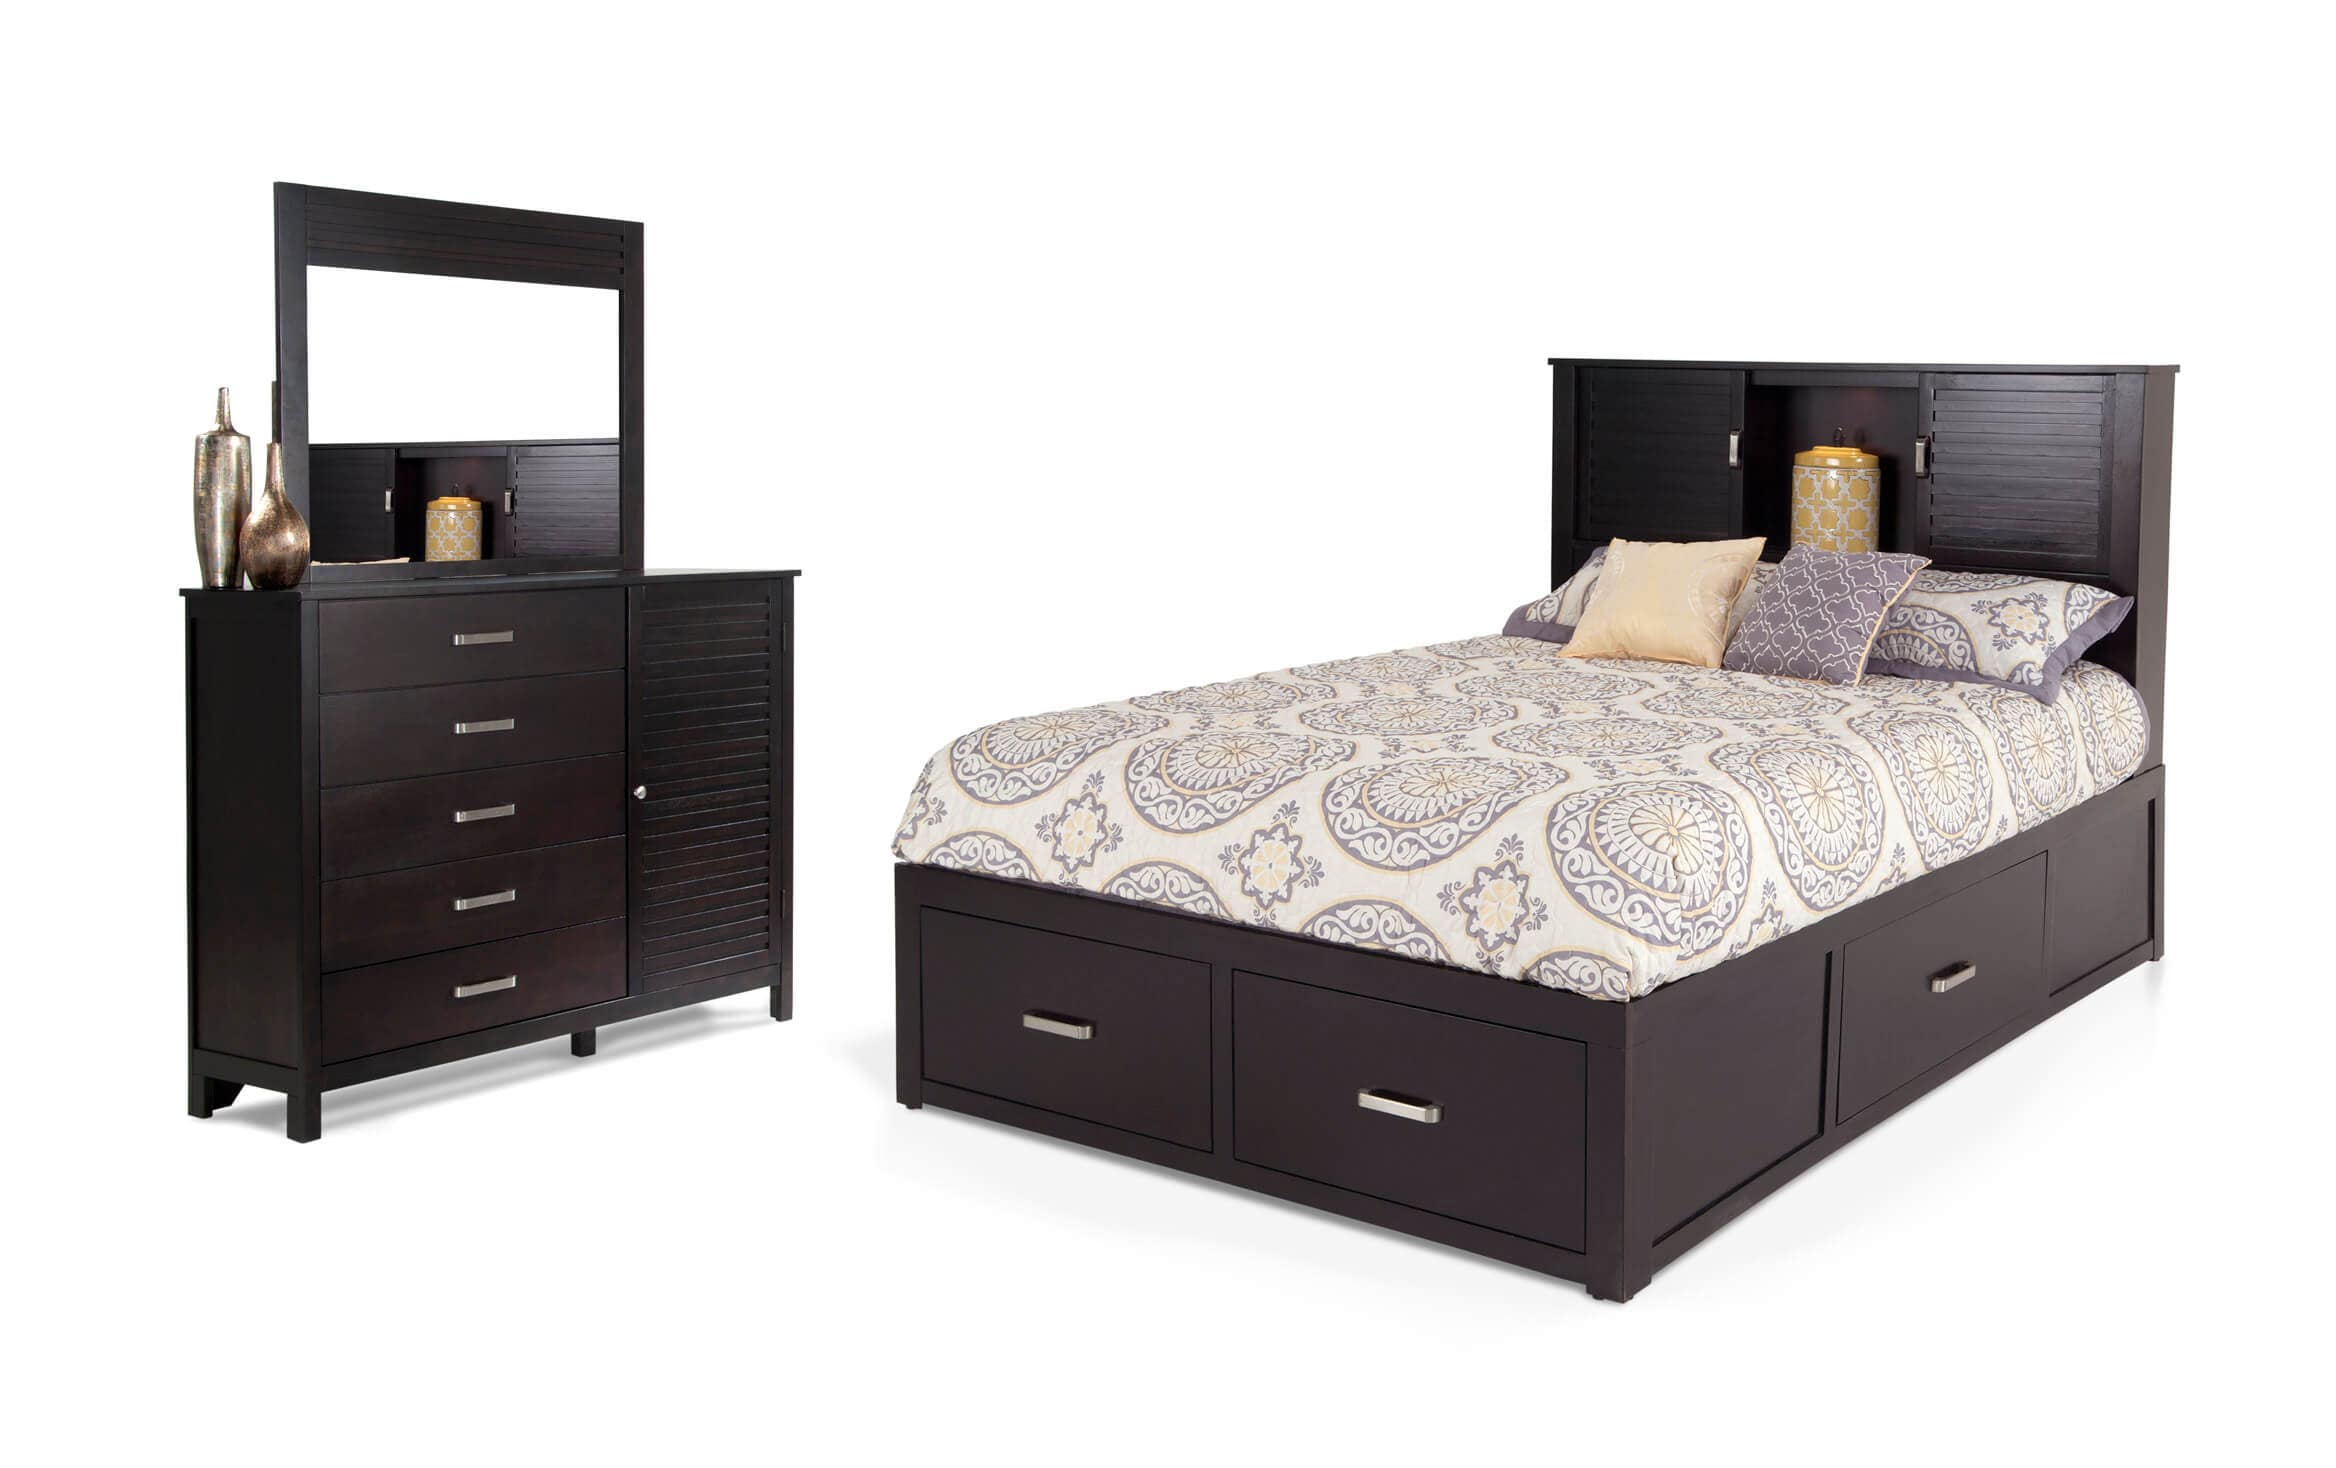 Dalton Queen Espresso Storage Bedroom, King Size Bed Sets Bobs Furniture